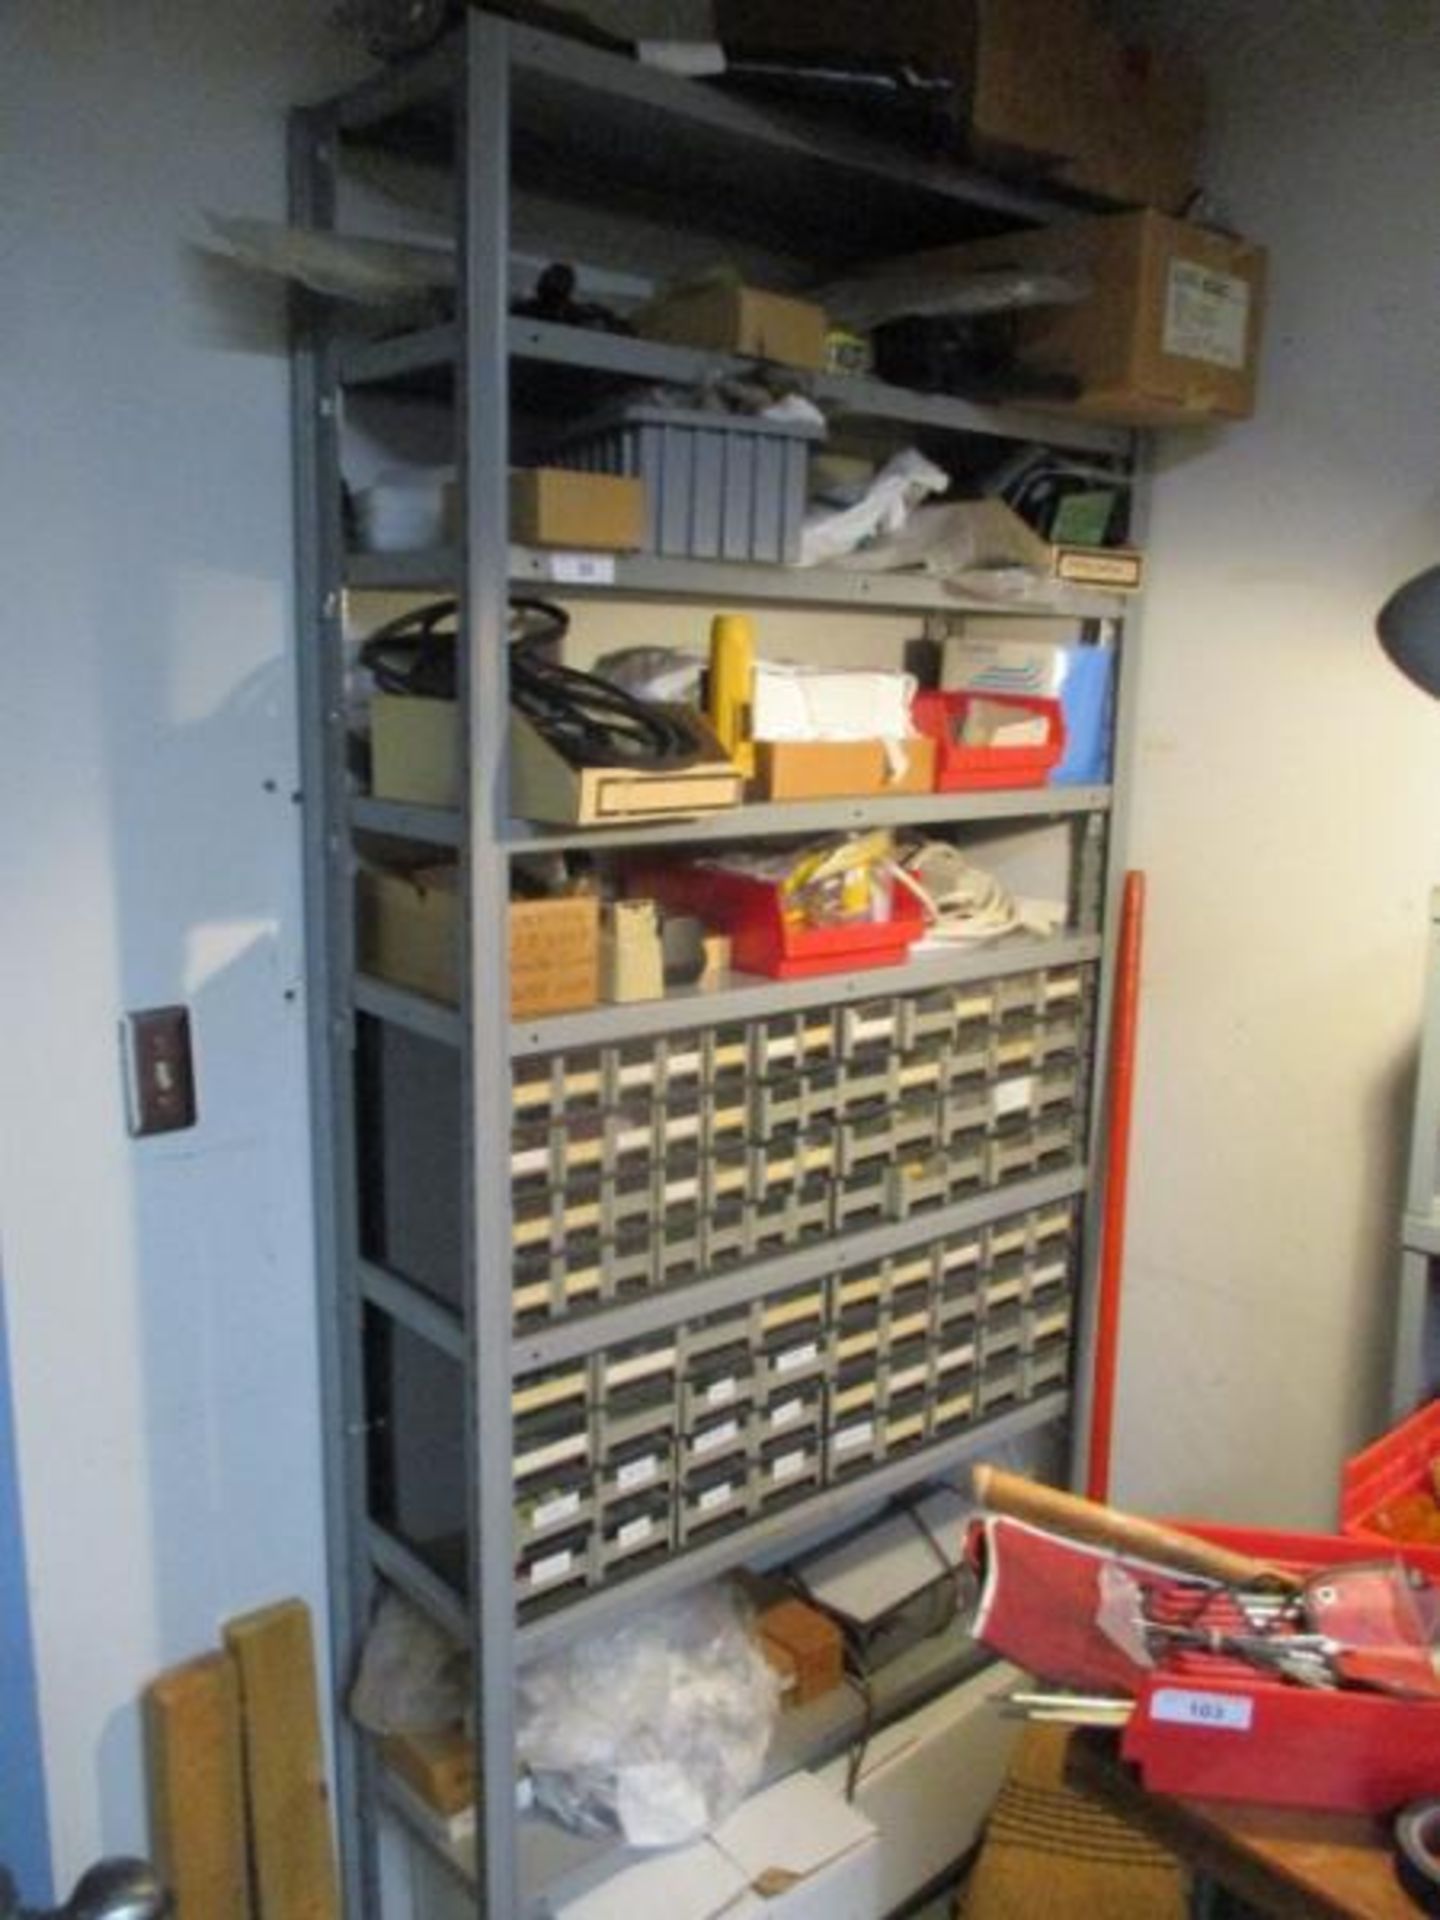 Shelf w/ Contents - Belts, Organizer Bin, Fuses, Air Parts, Etc.